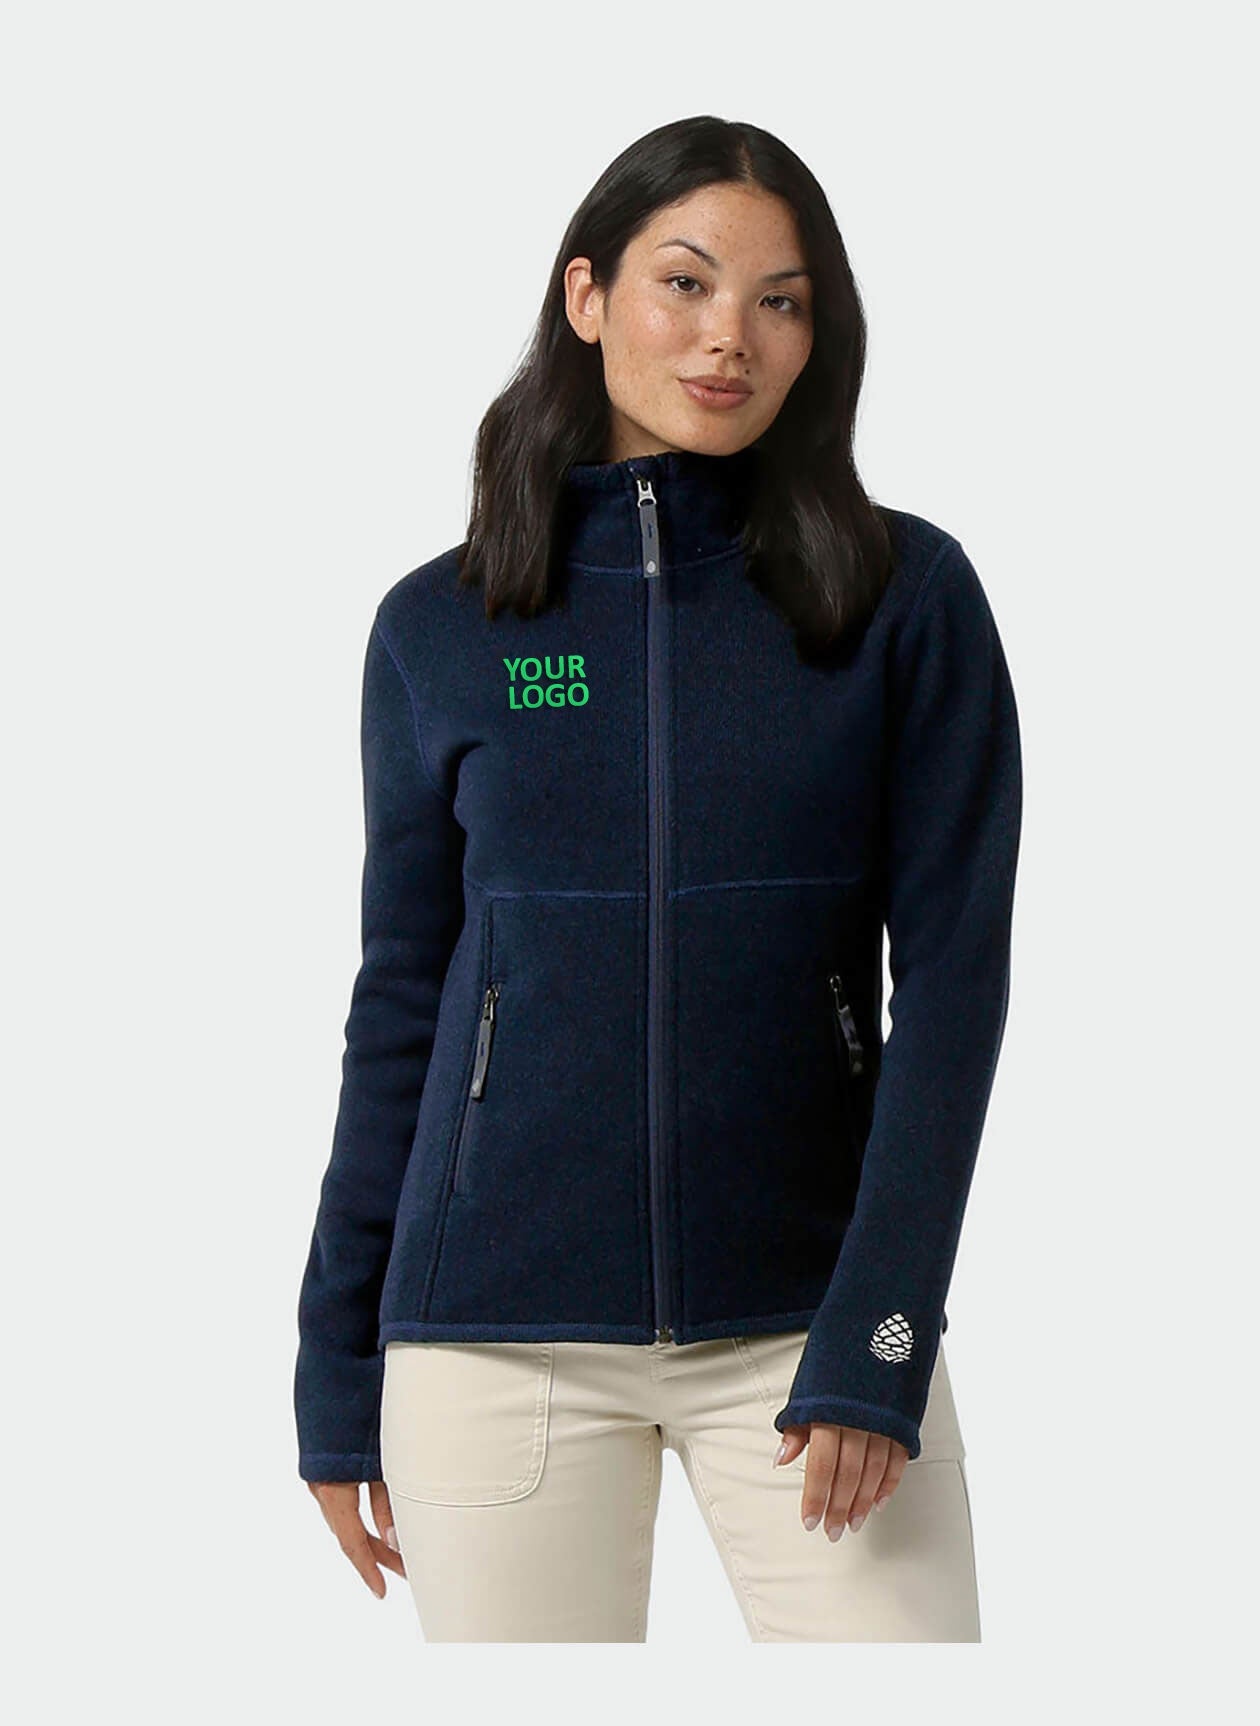 STIO Women's Sweetwater Fleece Jacket, Mountain Shadow